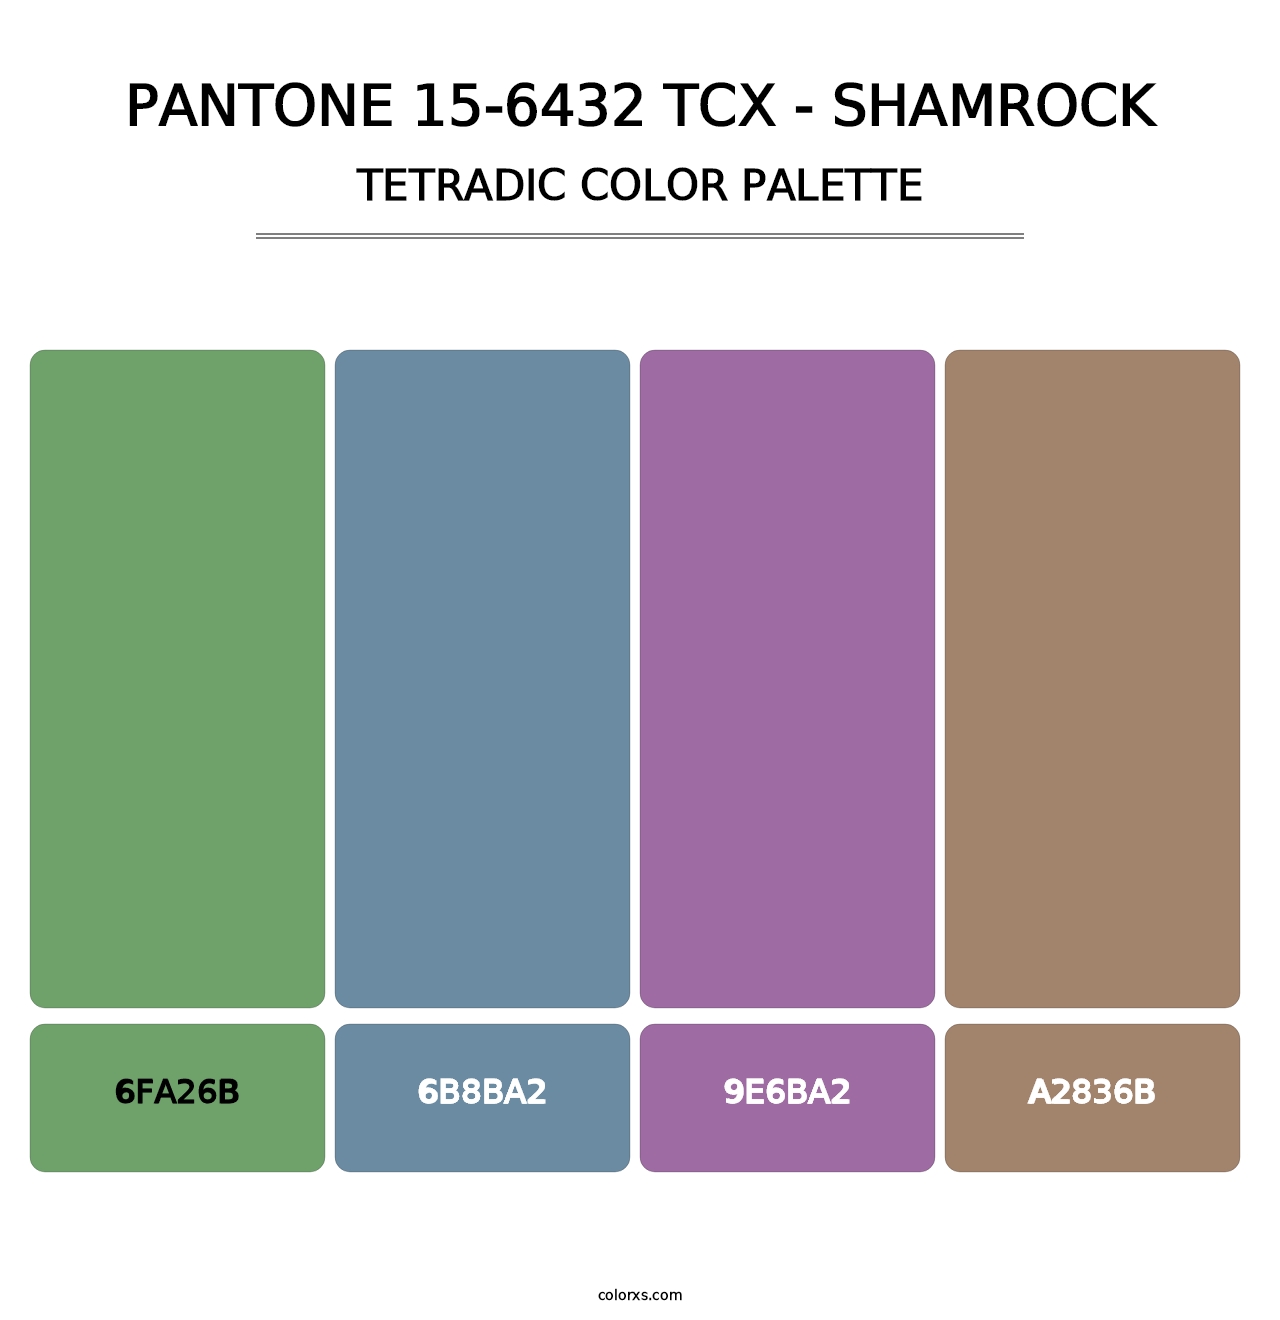 PANTONE 15-6432 TCX - Shamrock - Tetradic Color Palette